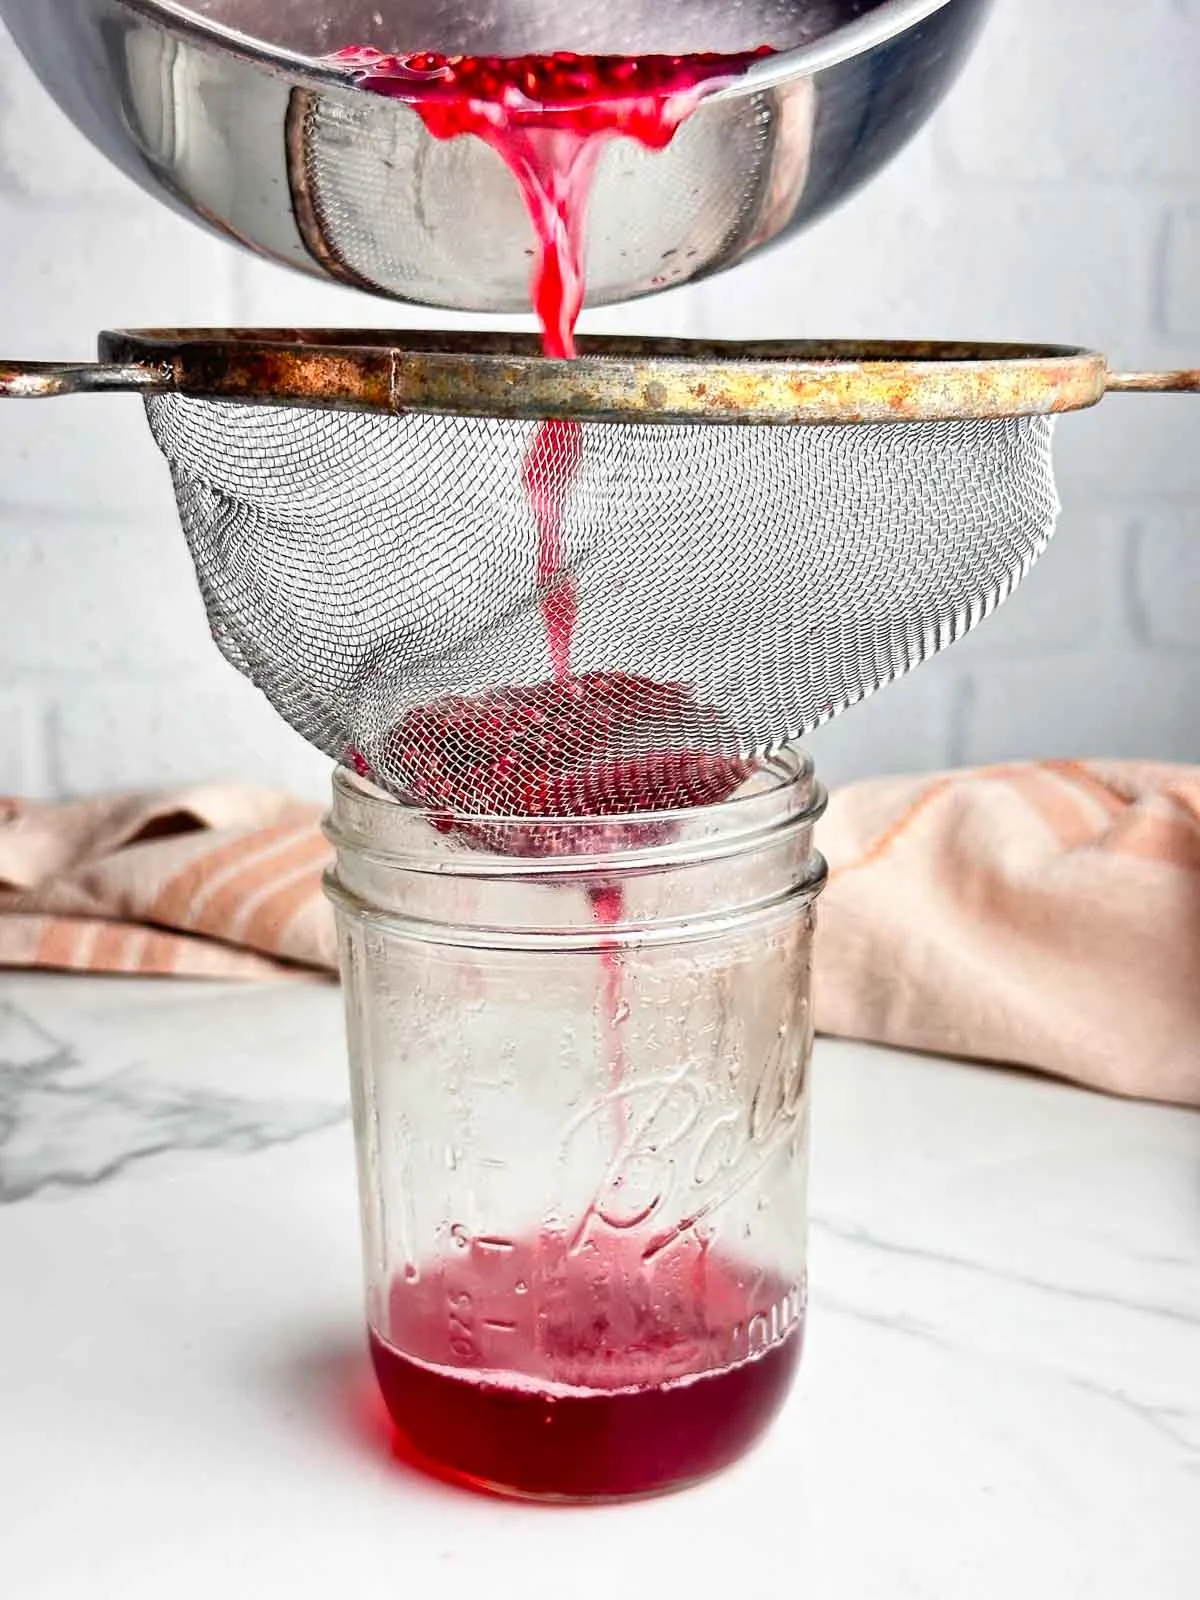 Strain the raspberry mixture.